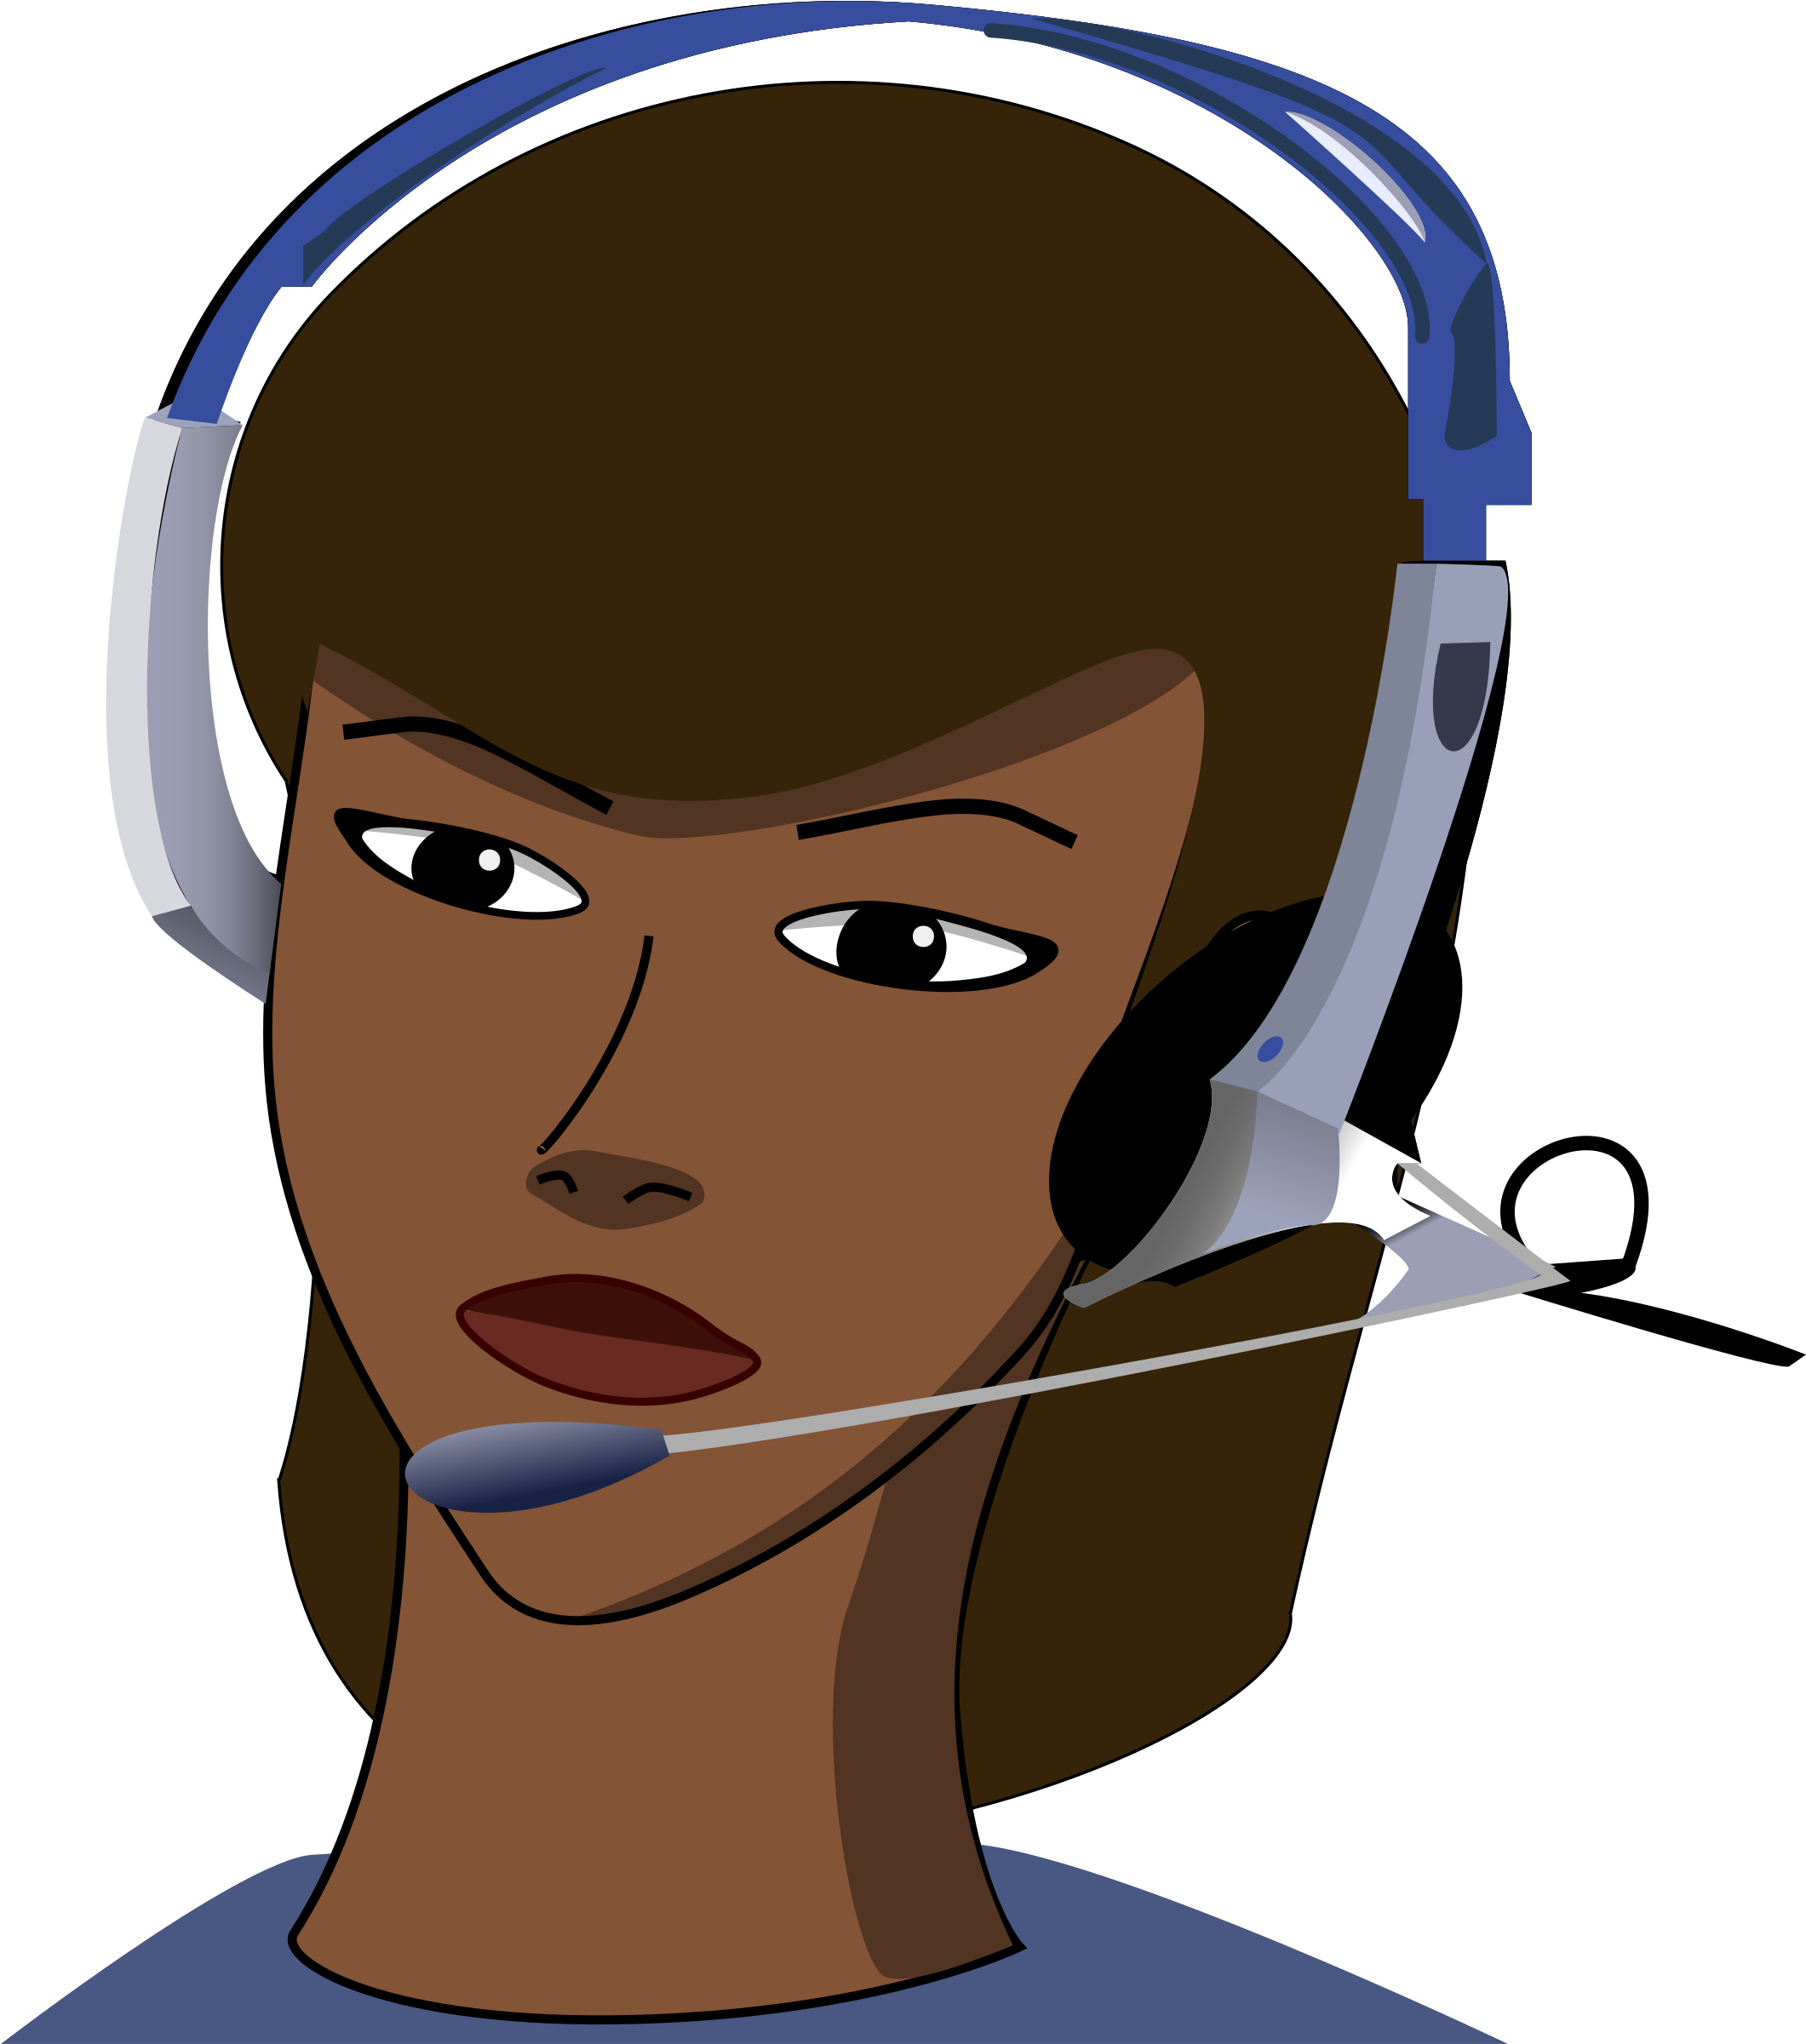 Call-centre - Call Center Person Animated (2131x2400)